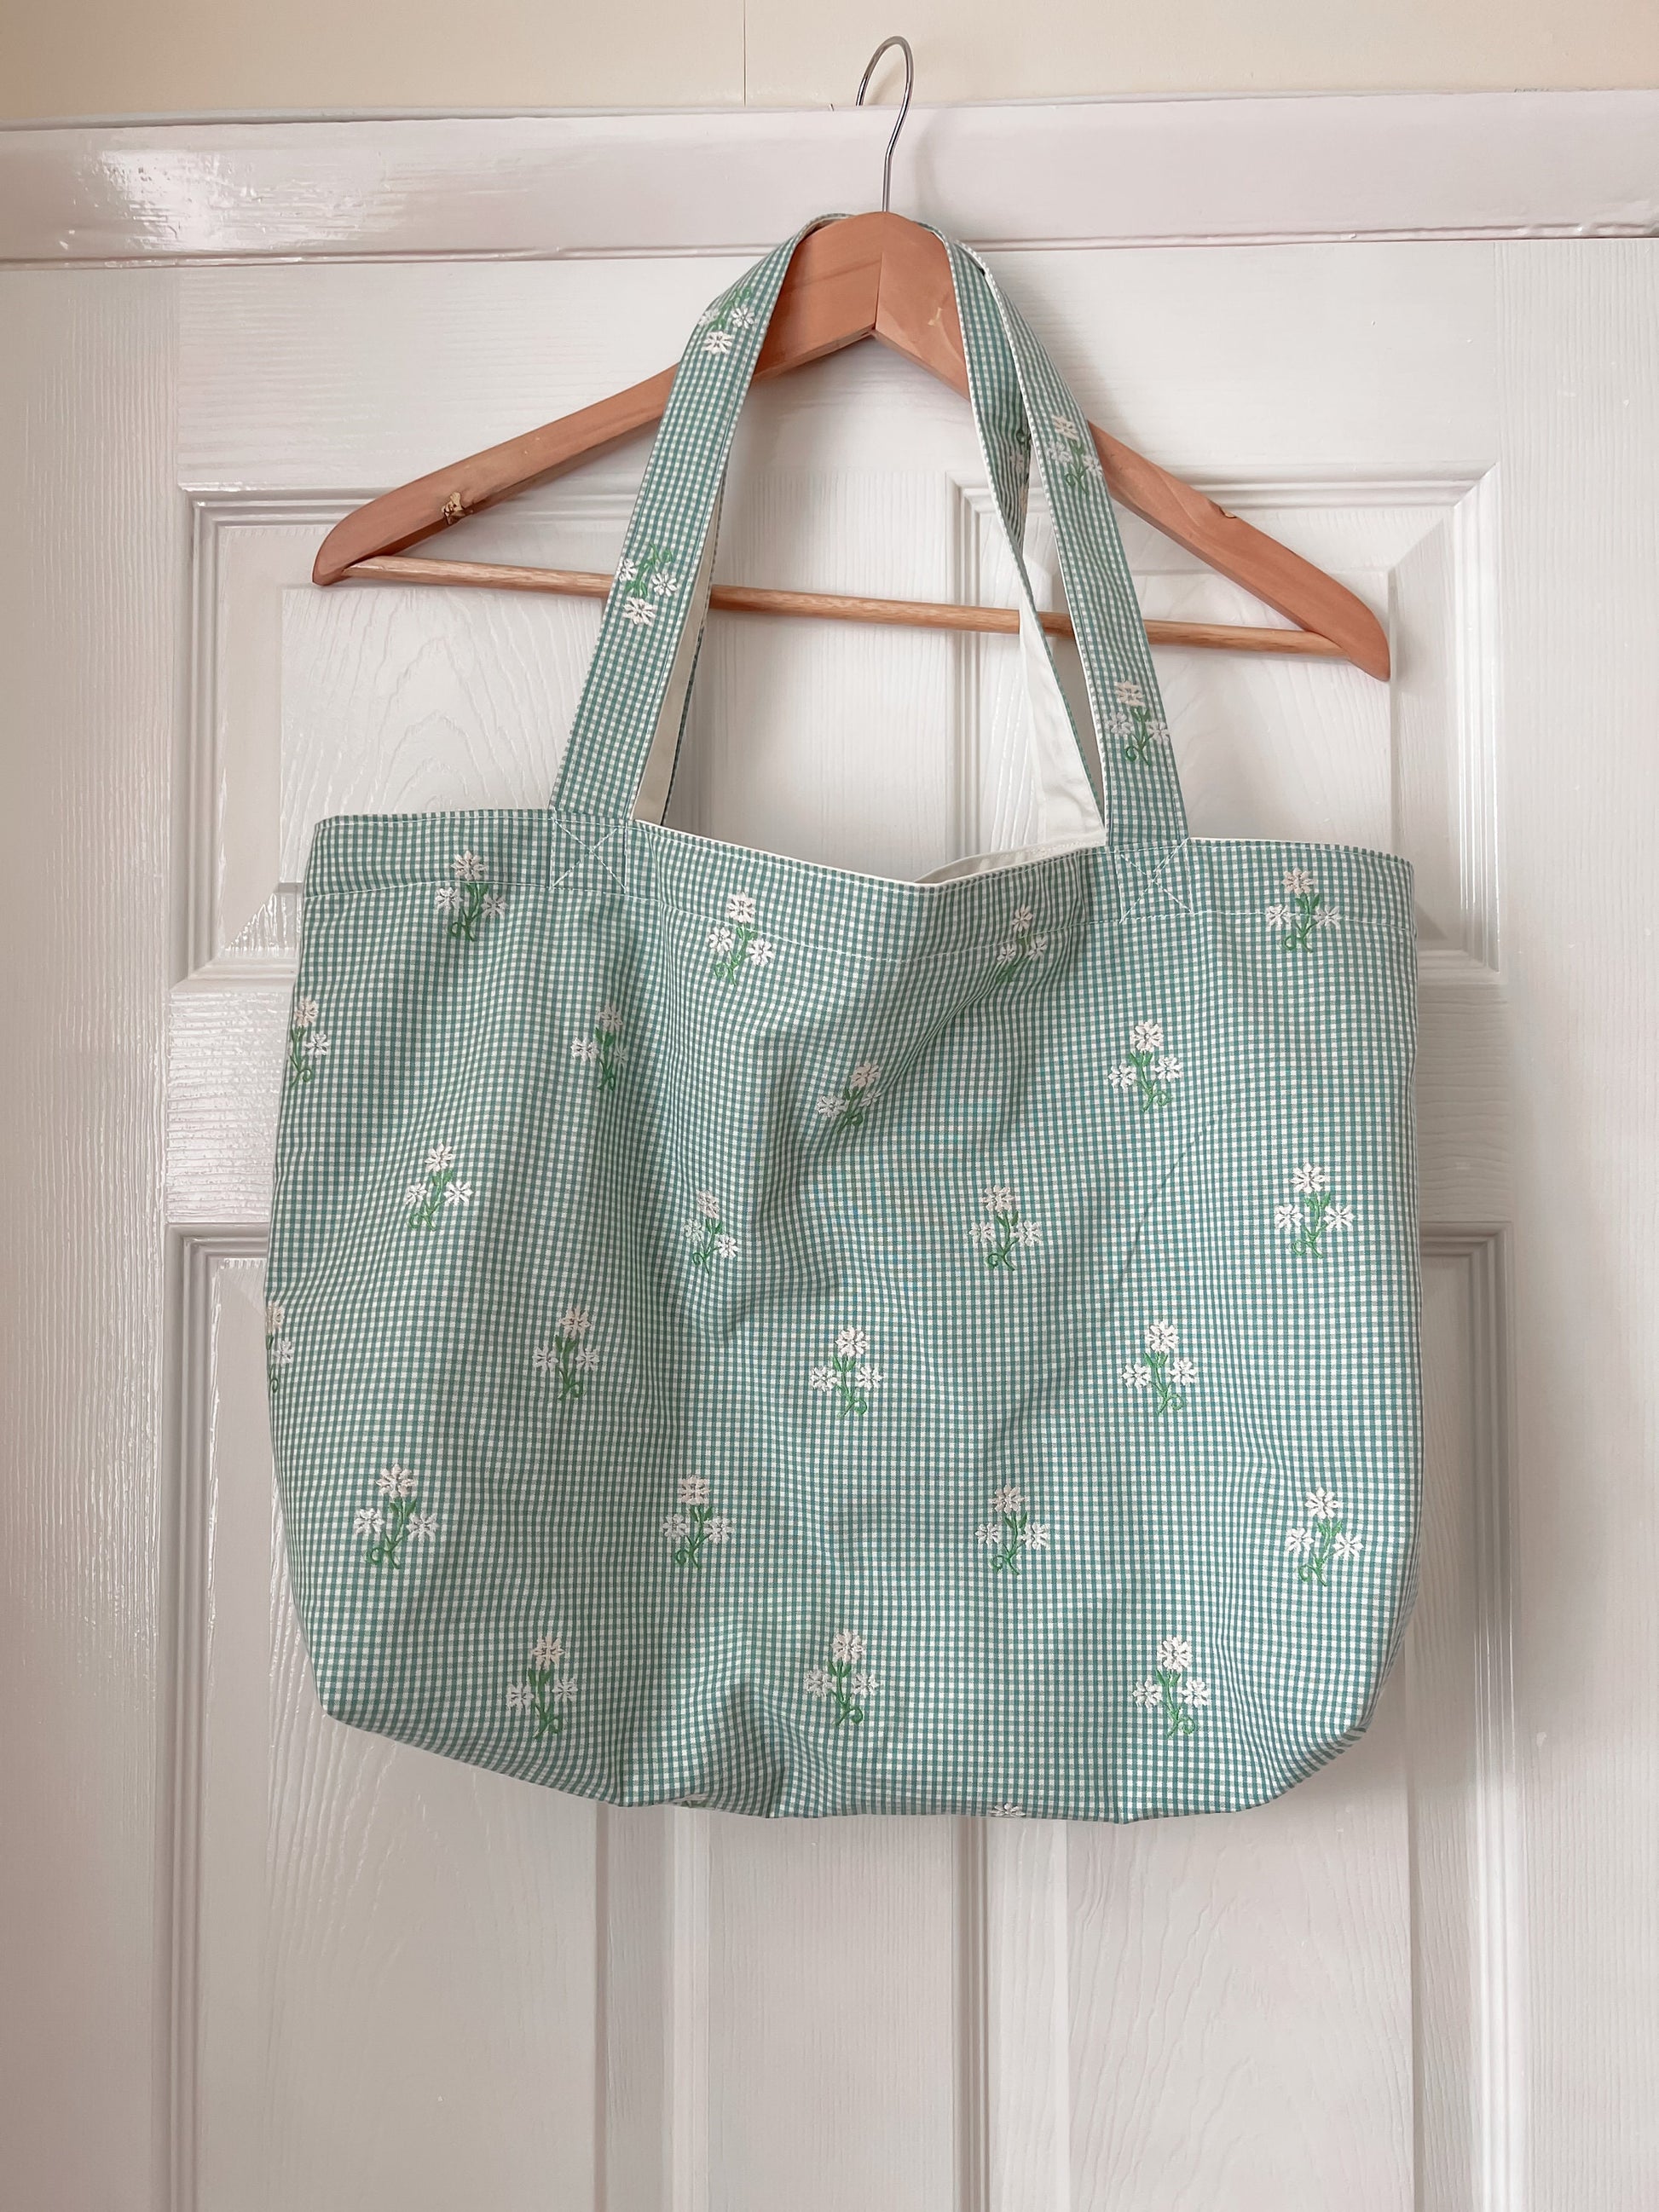 FLORAL TOTE BAG green embroidered floral tote bag, large reversible, mint floral gingham cotton tote bag, ditsy canvas bag handmade in U.K.